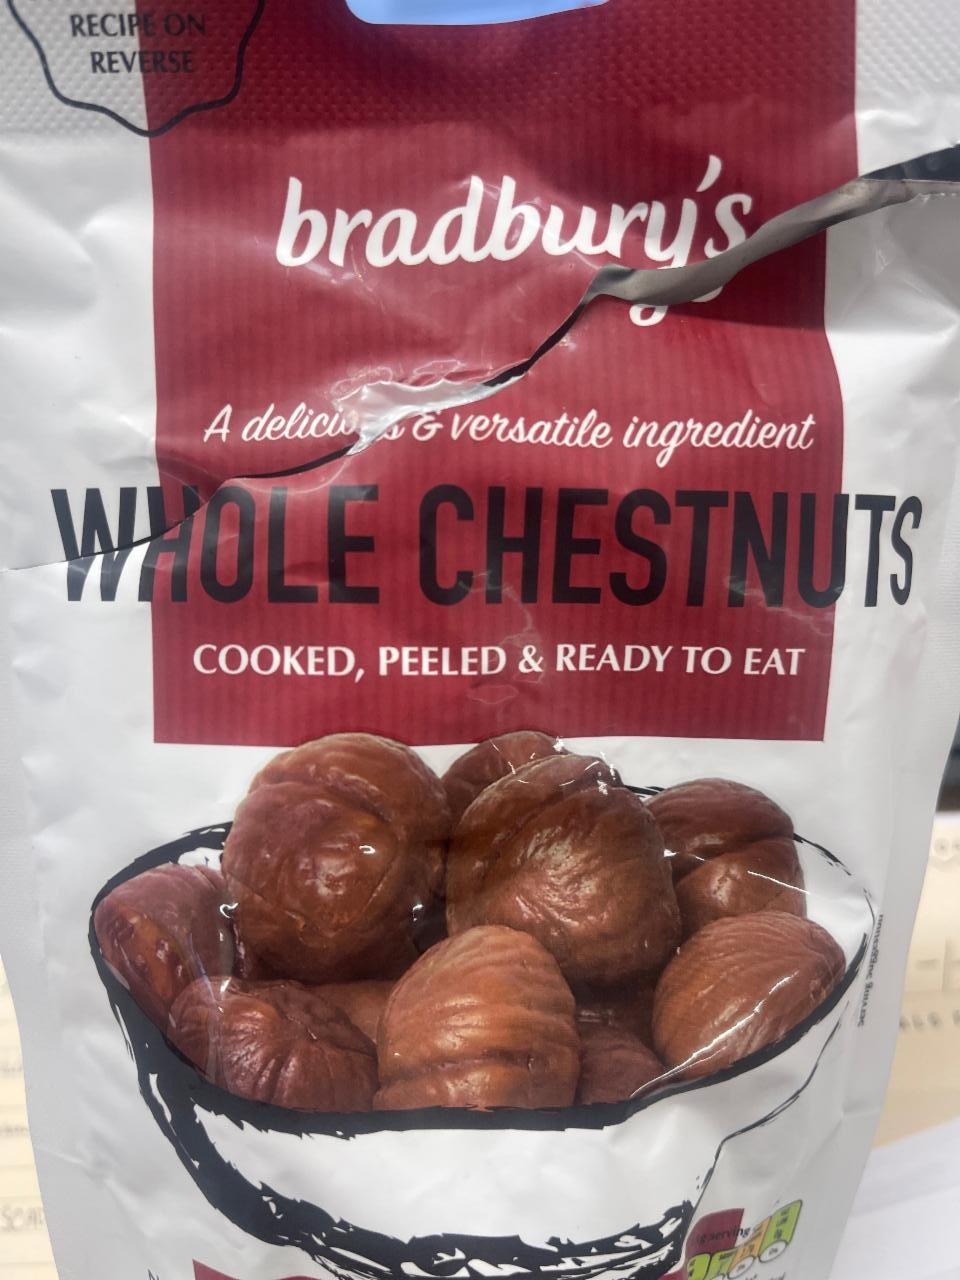 Fotografie - Whole chestnuts Bradbury's